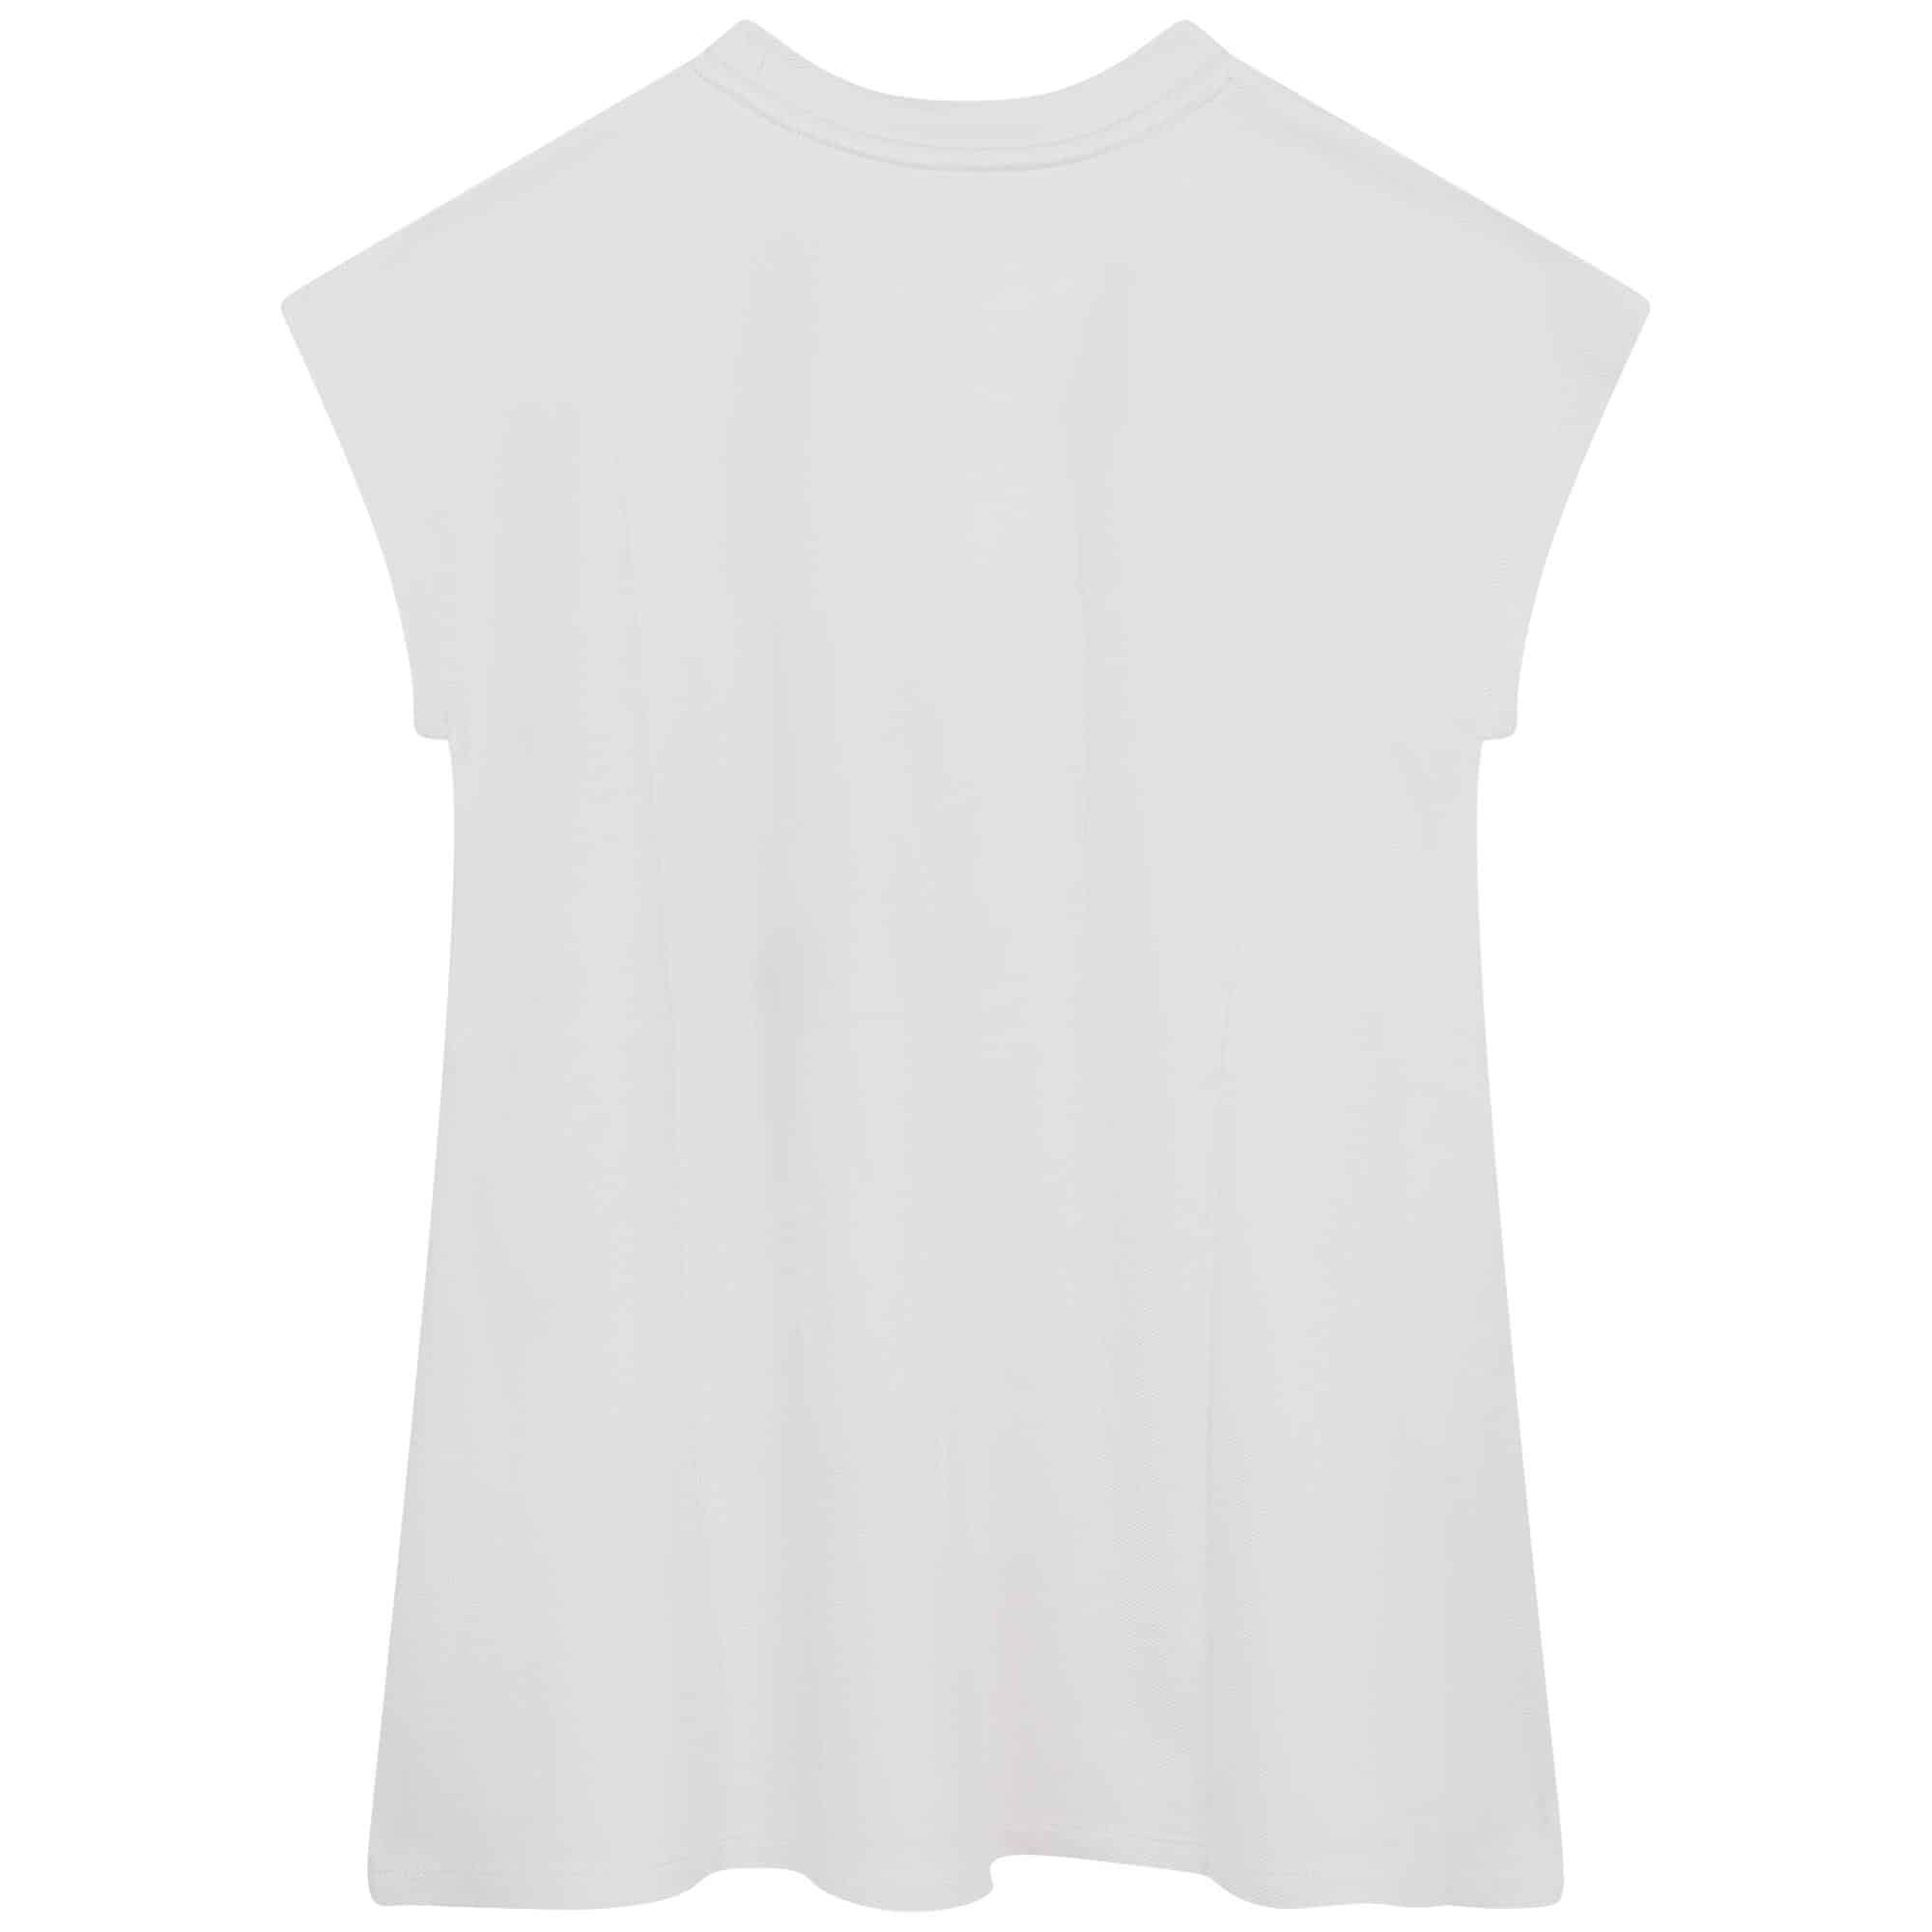 DKNY girls white dress with logo back